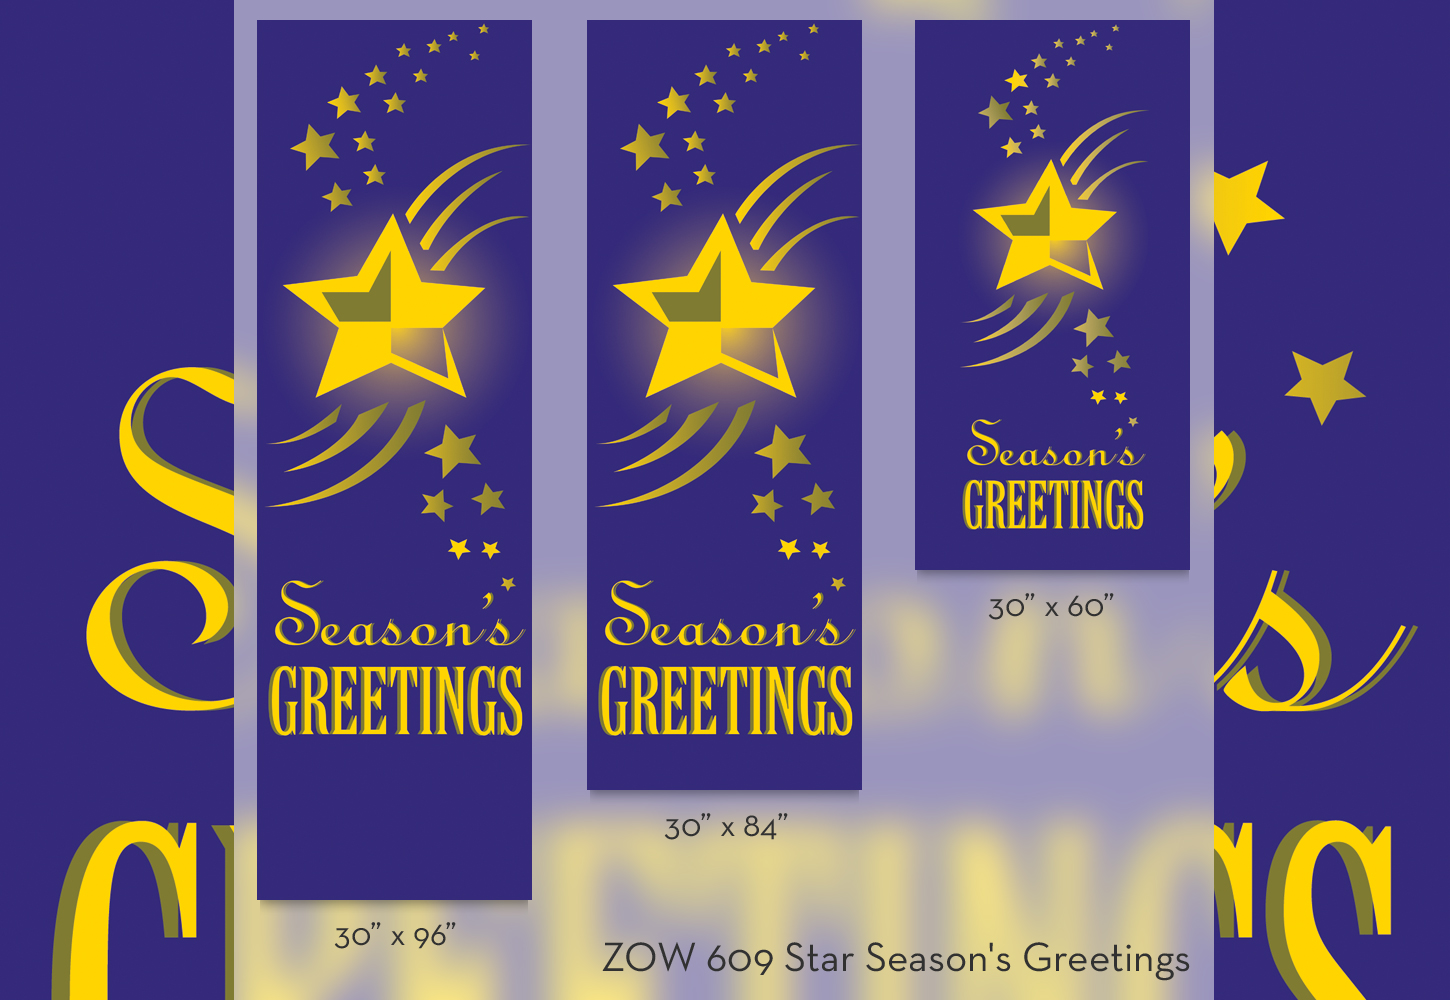 ZOW 609 Star Season's Greetings